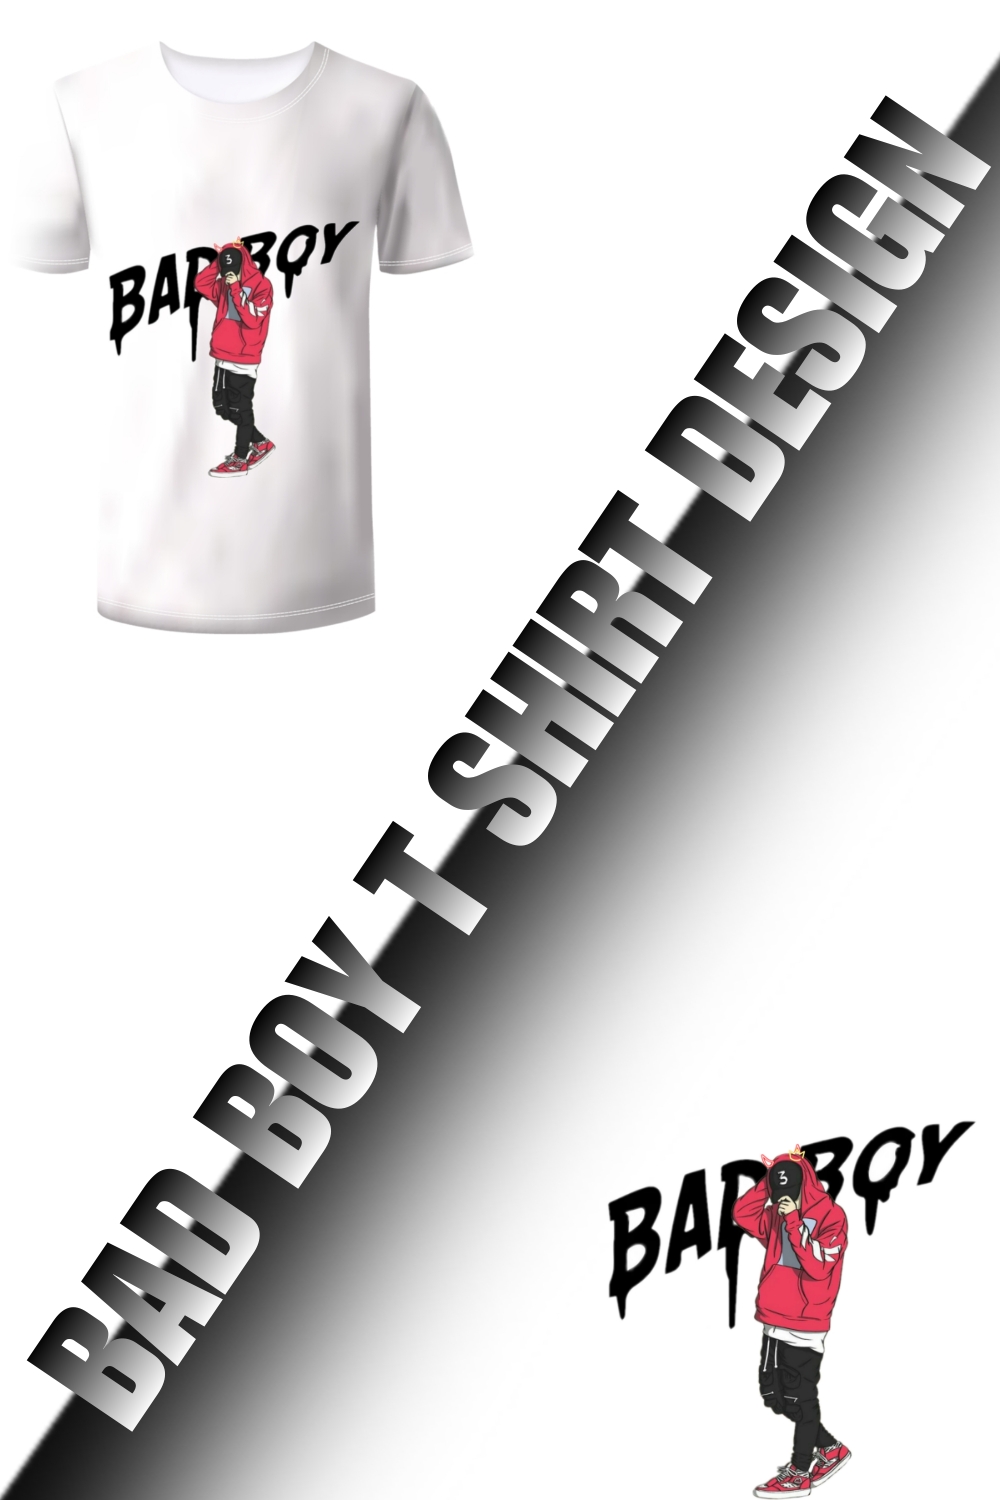 BAD BOY T-Shirts for Men